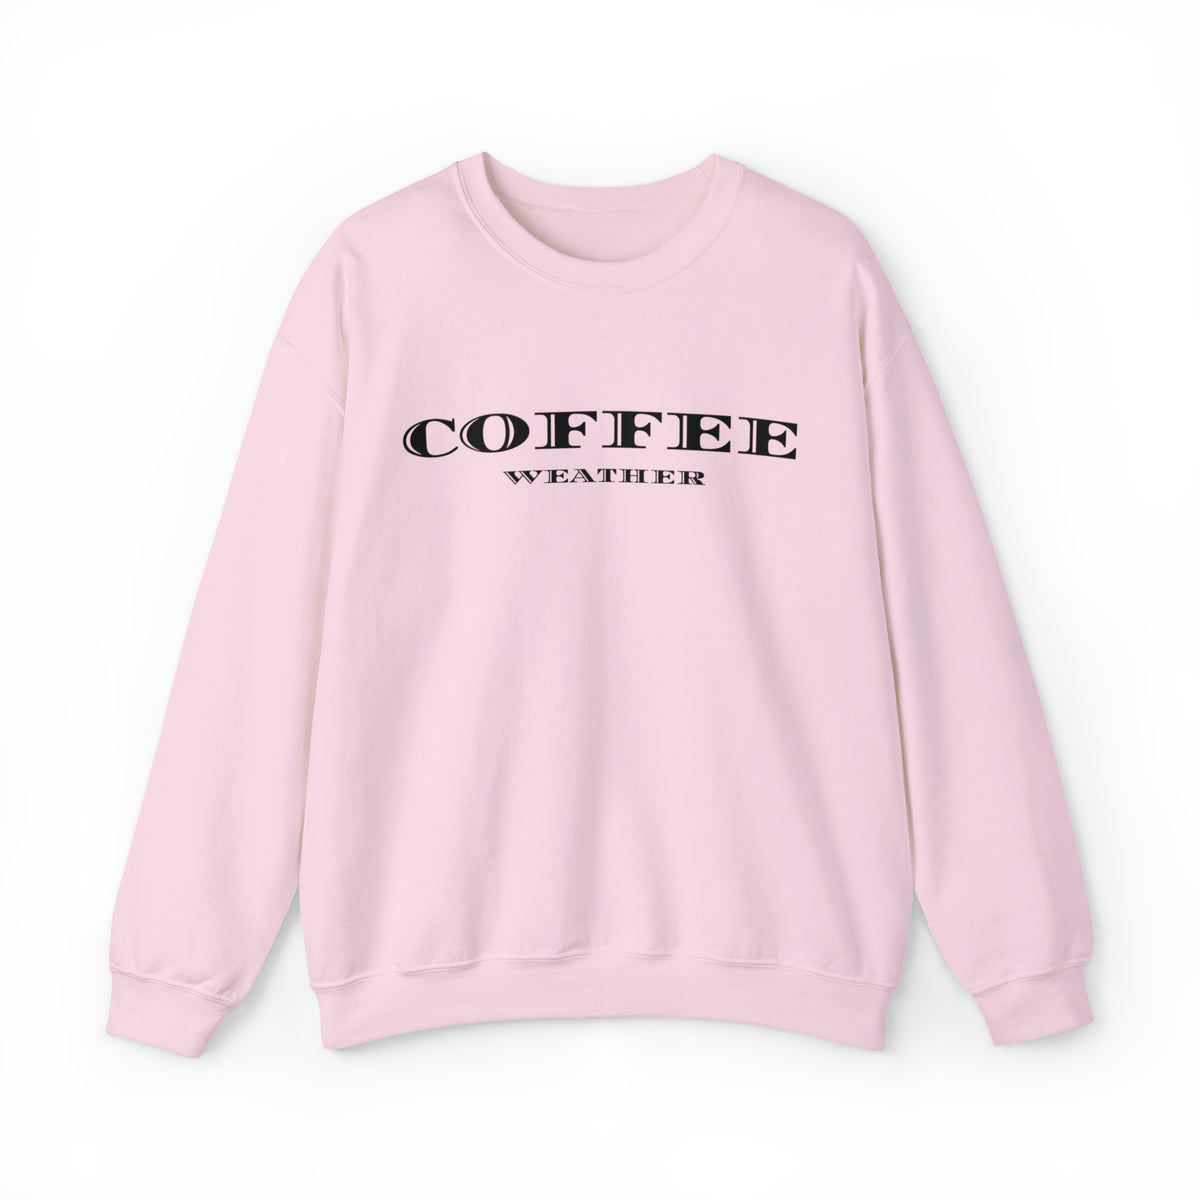 Coffee Weather Sweatshirt, Coffee Weather, Cute Coffee Weather Sweatshirt, Trendy, Sweatshirts, Cute Sweatshirt, Oversized Fit